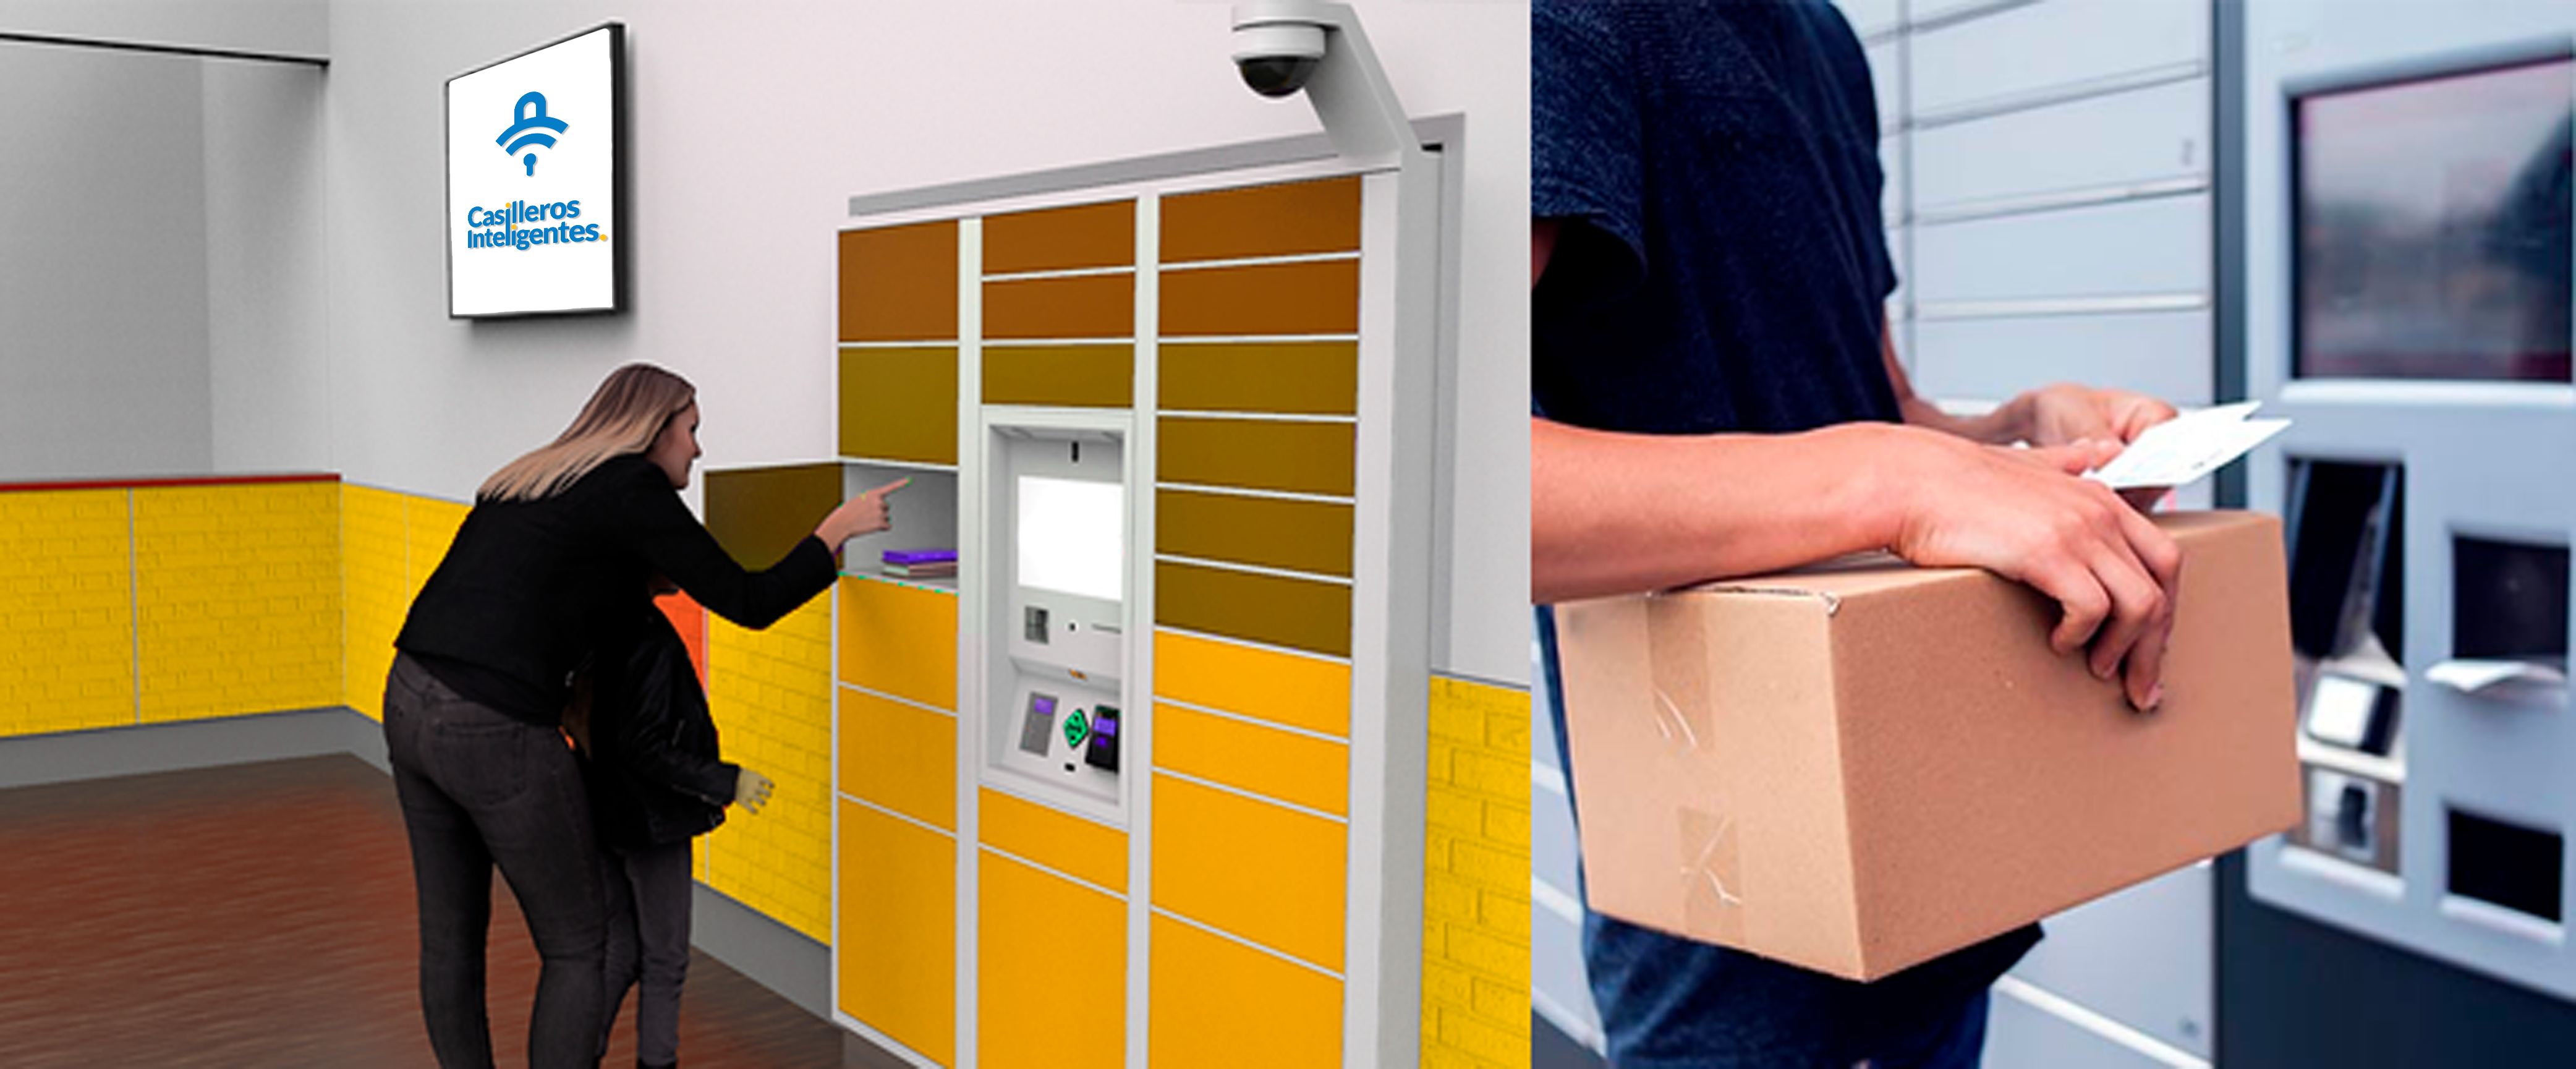 Lockers inteligentes smart lockers de seguridad